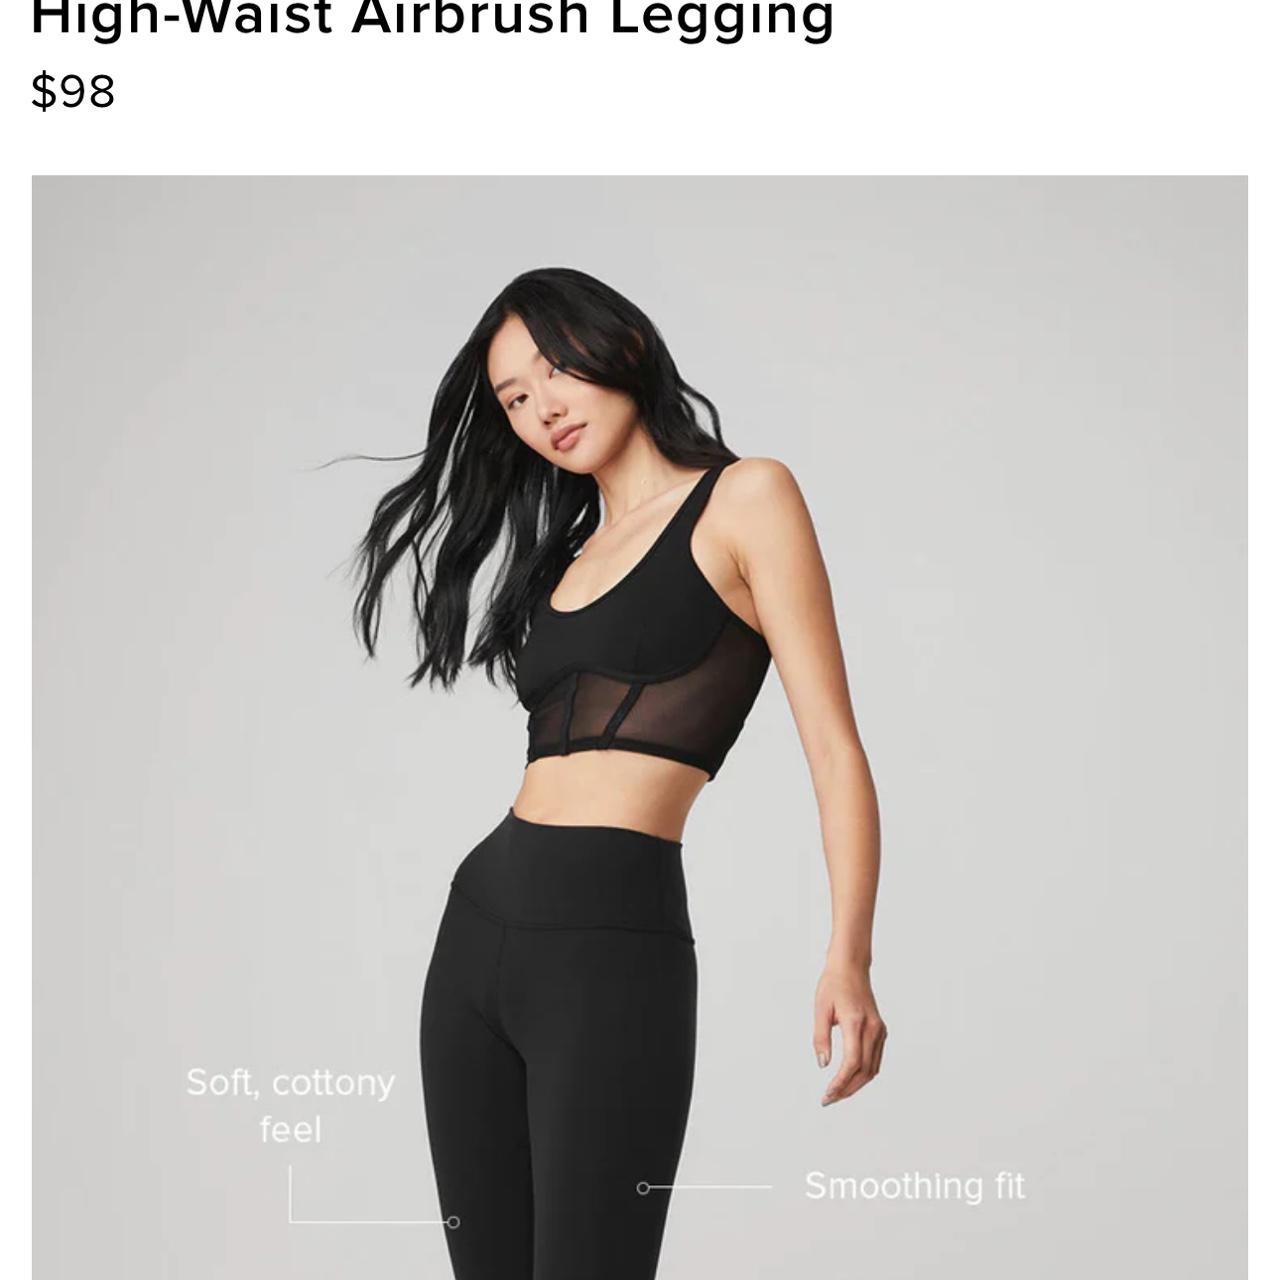 Alo Yoga, High Waisted Airbrush Legging - Black